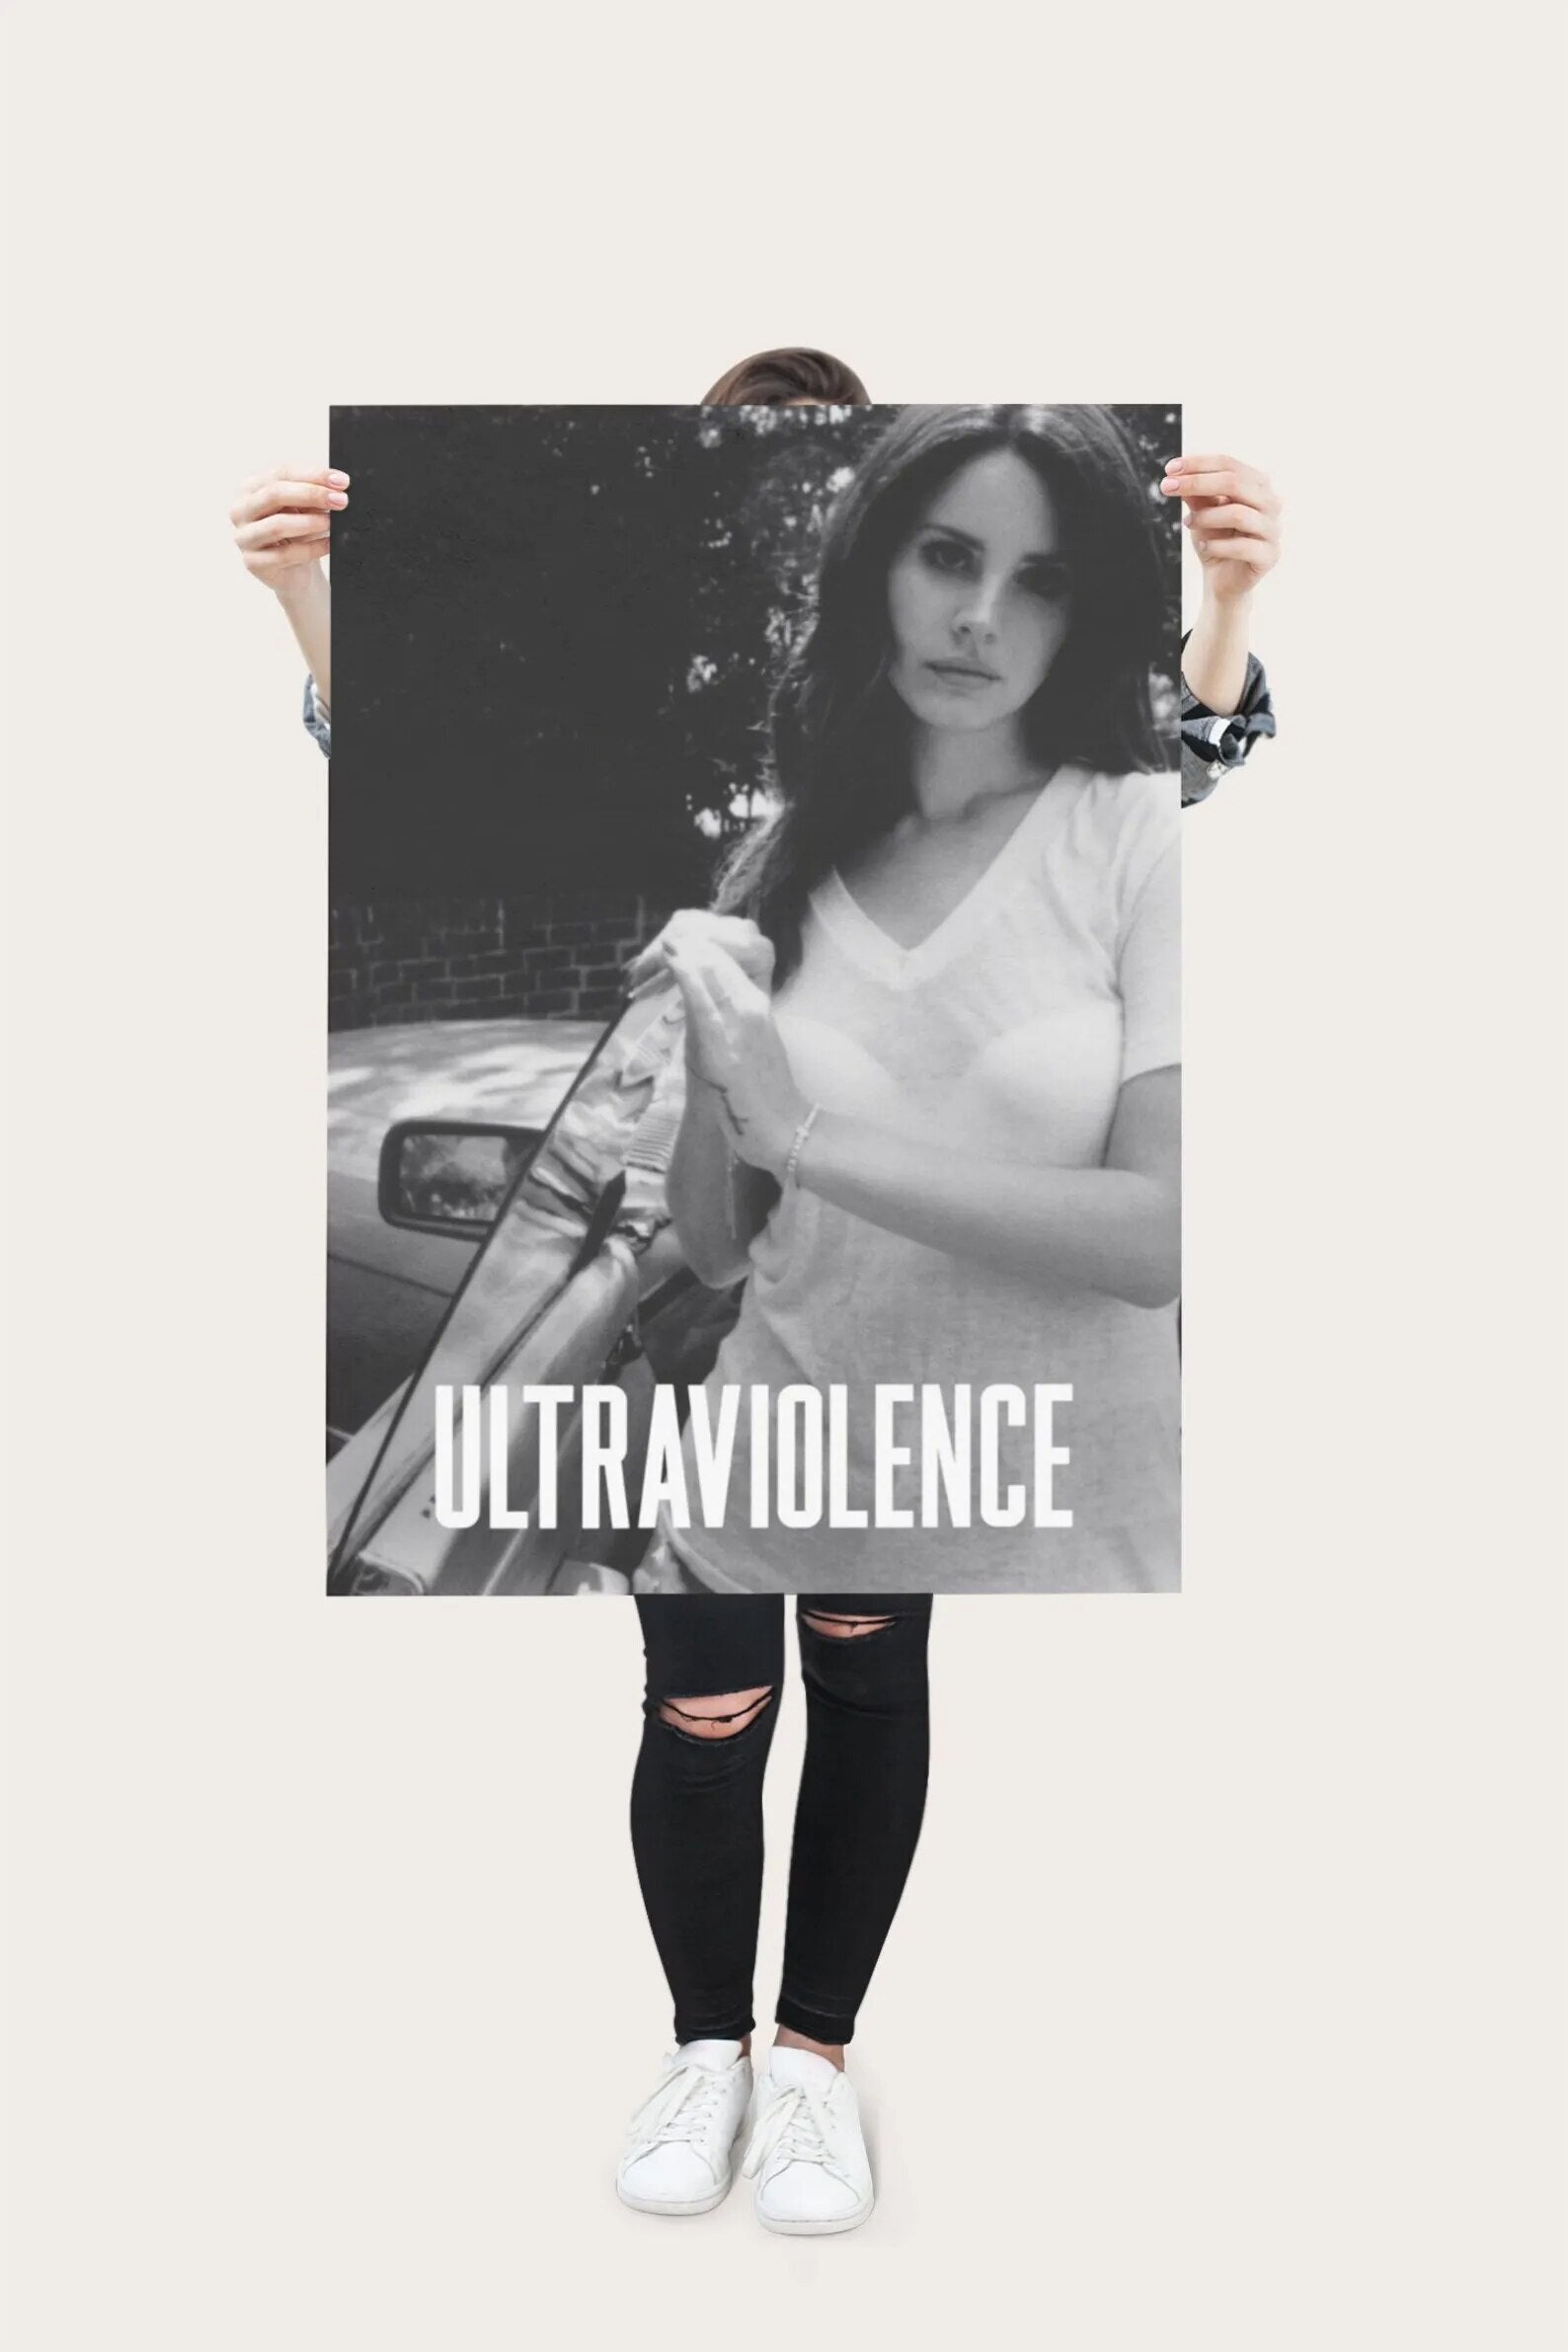 Lana del Rey - Ultraviolence (Standard, CD)